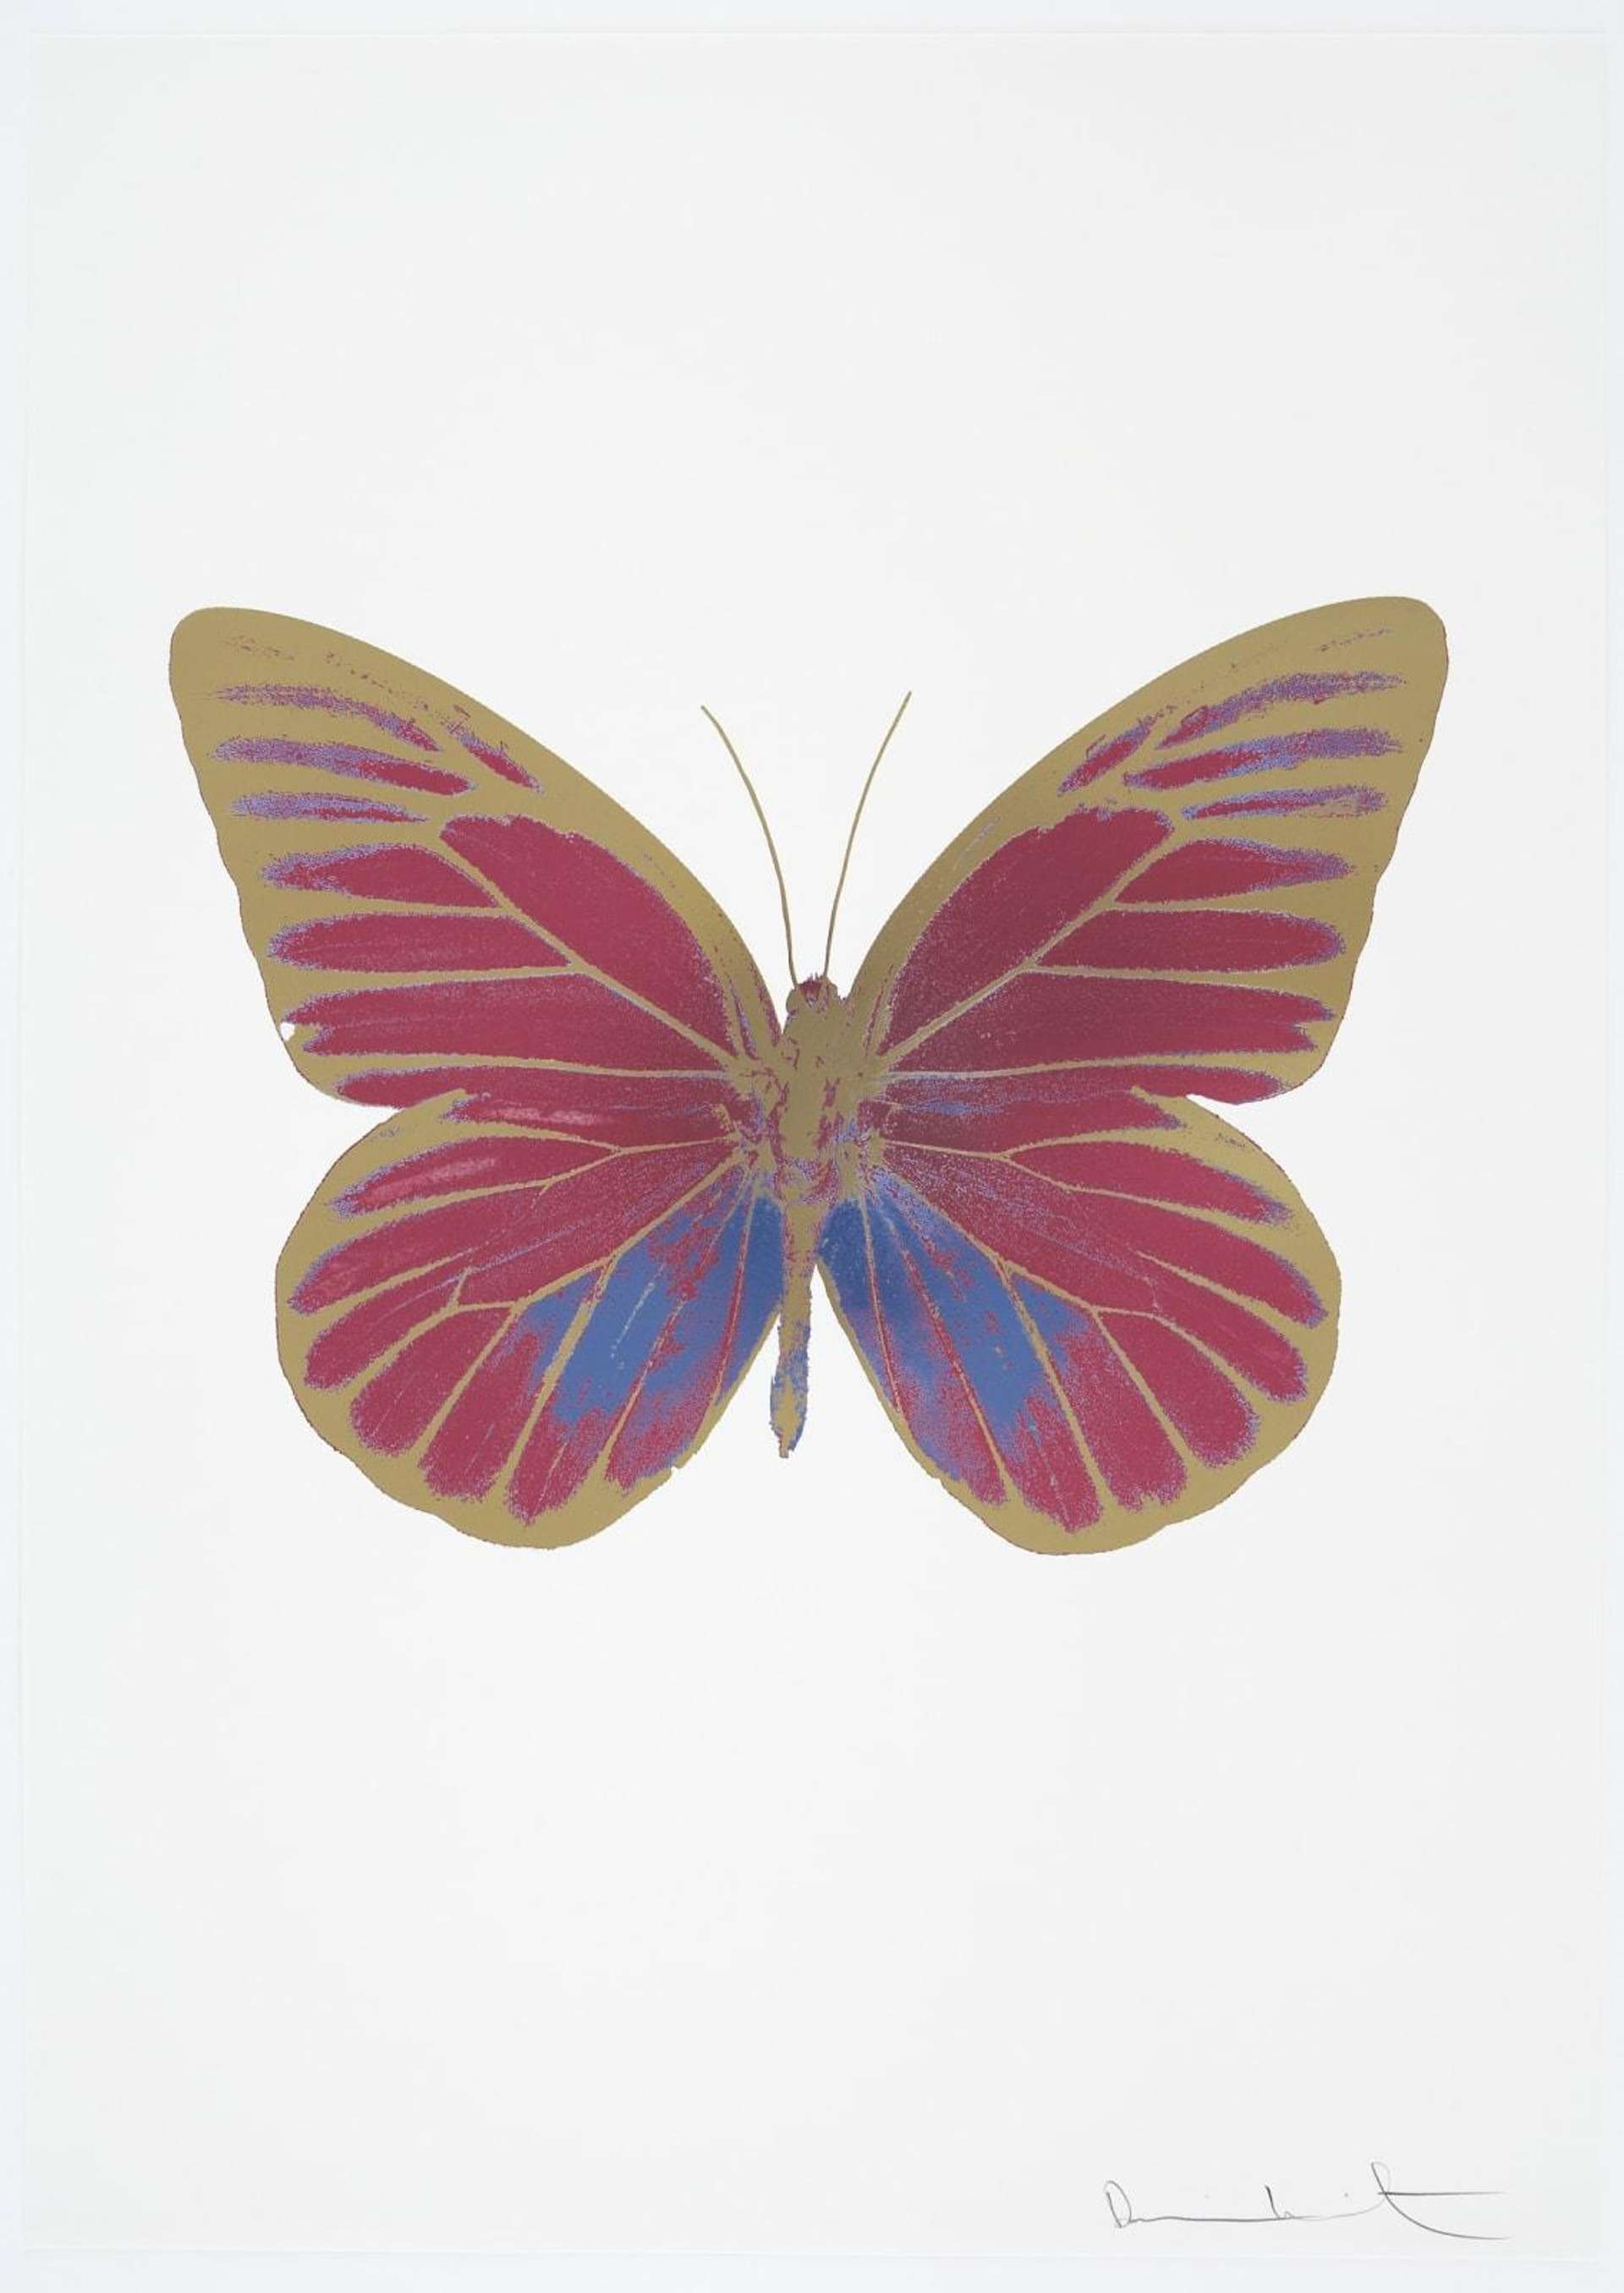 Damien Hirst: The Souls I (loganberry pink, cornflower blue, cool gold) - Signed Print